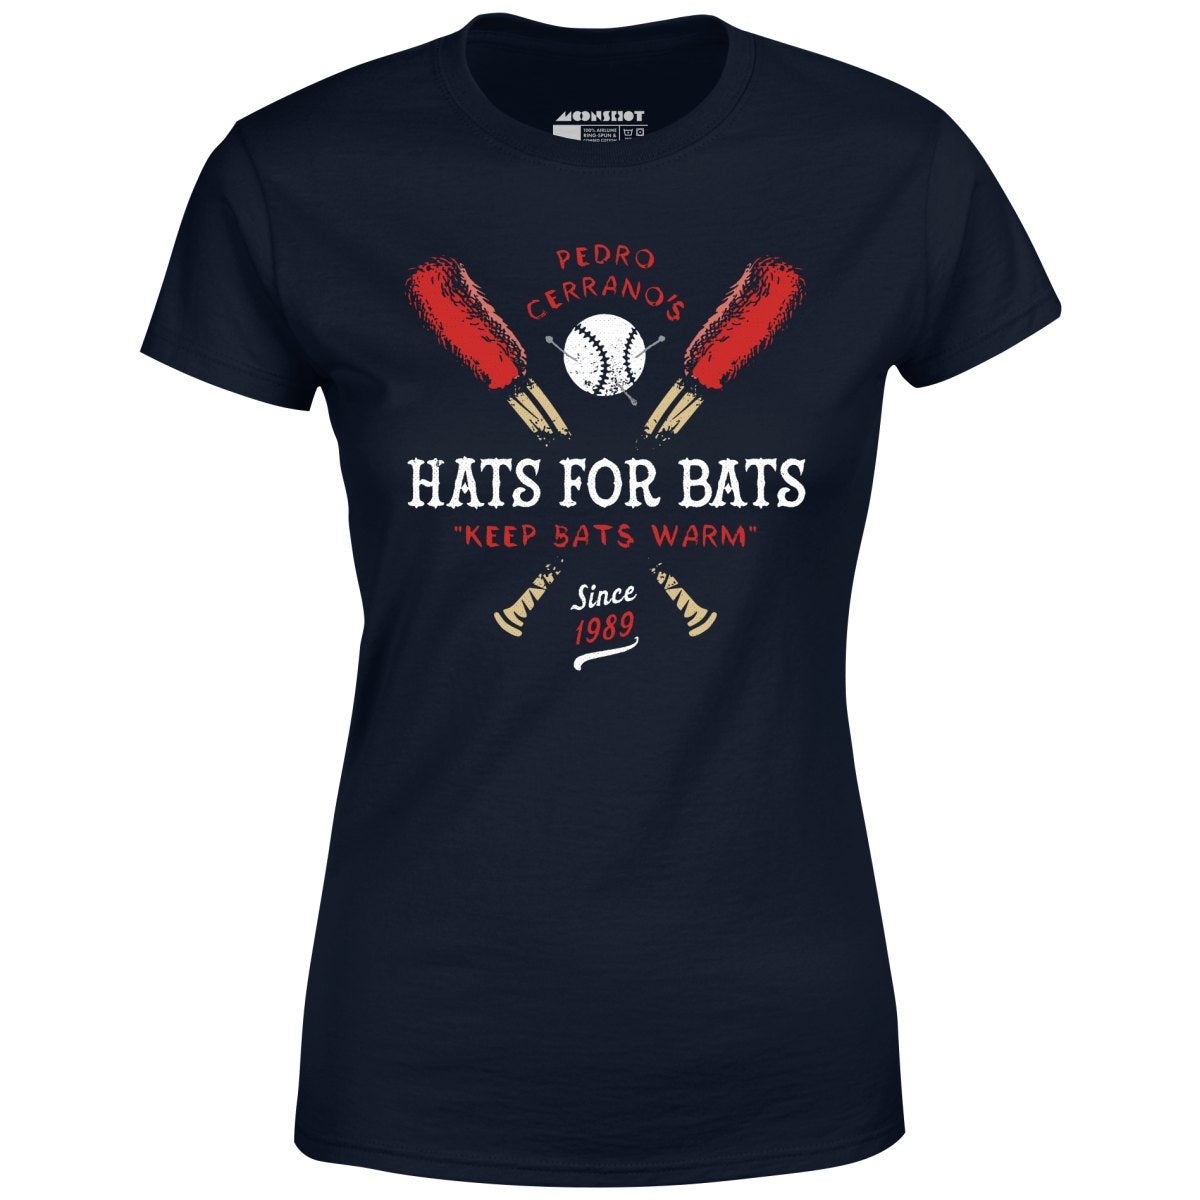 Pedro Cerrano's Hats for Bats - Women's T-Shirt